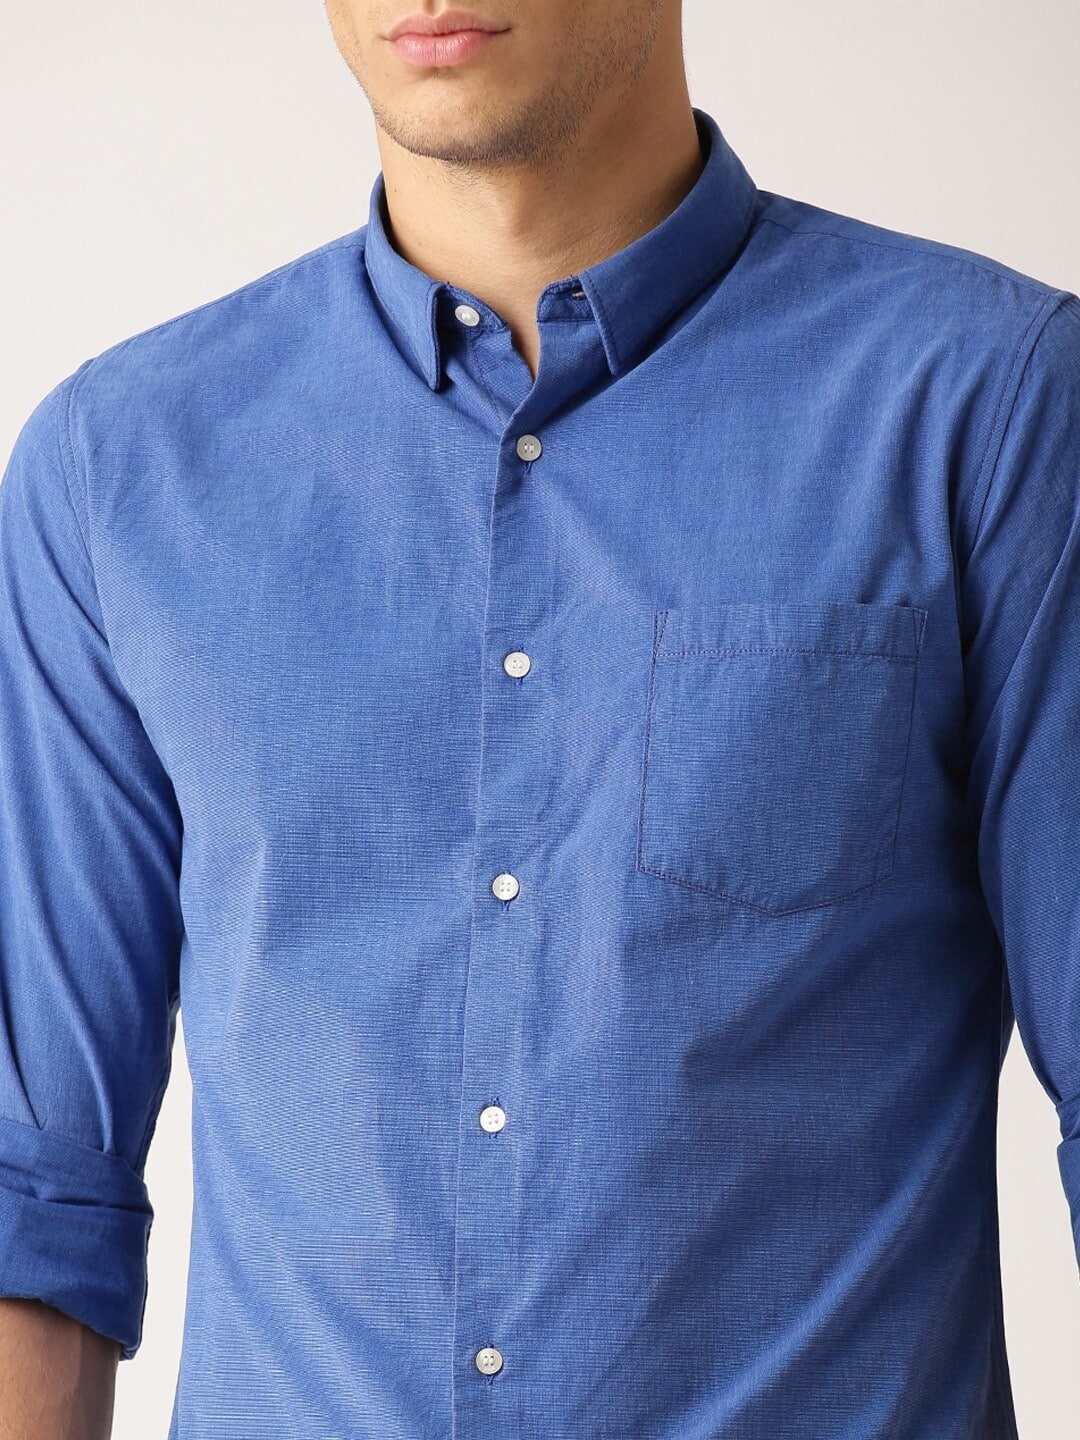 Men's Blue Formal Shirt